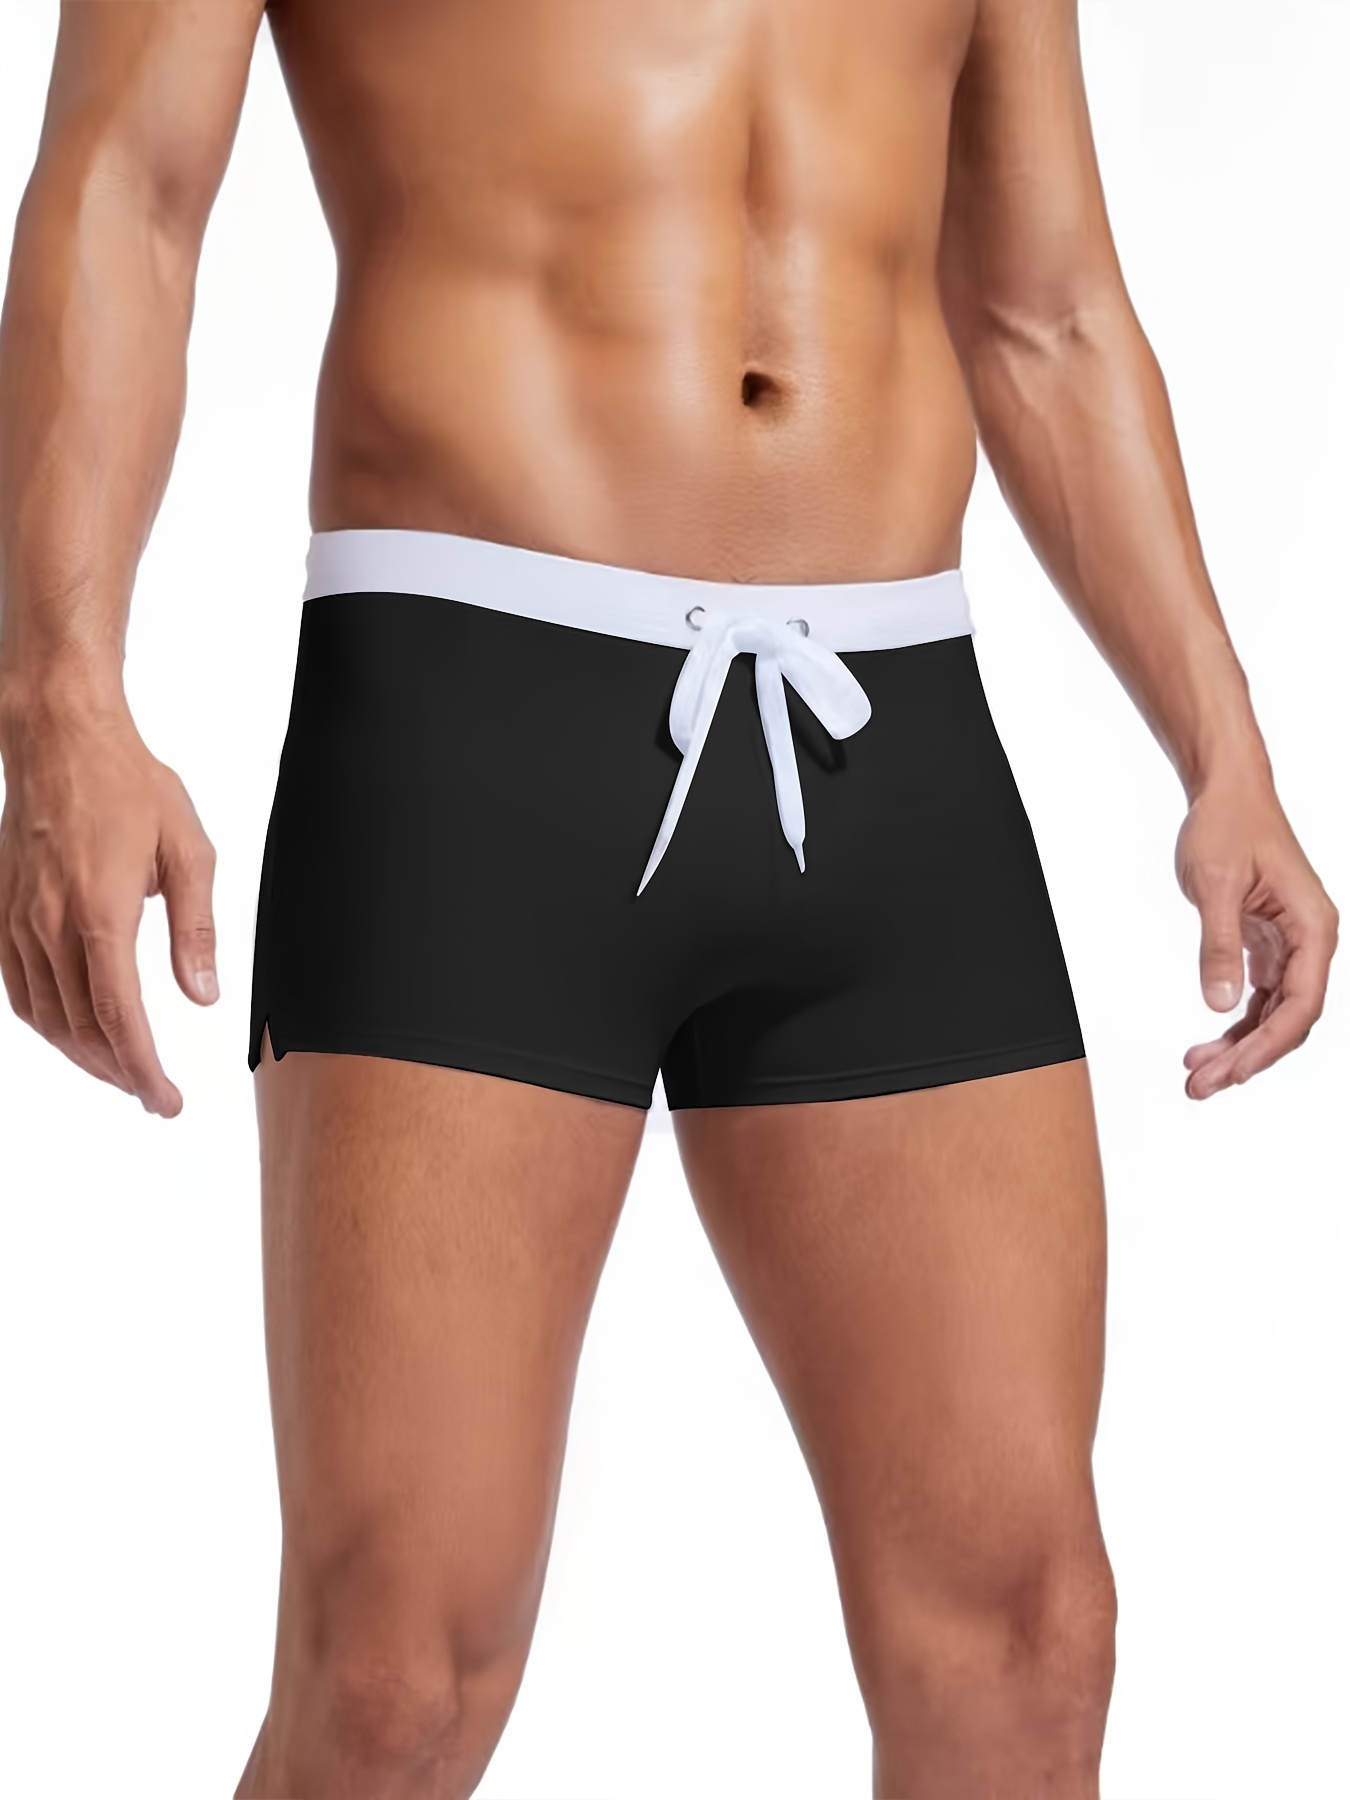 Men's boxer shorts black, Underwear & Beachwear